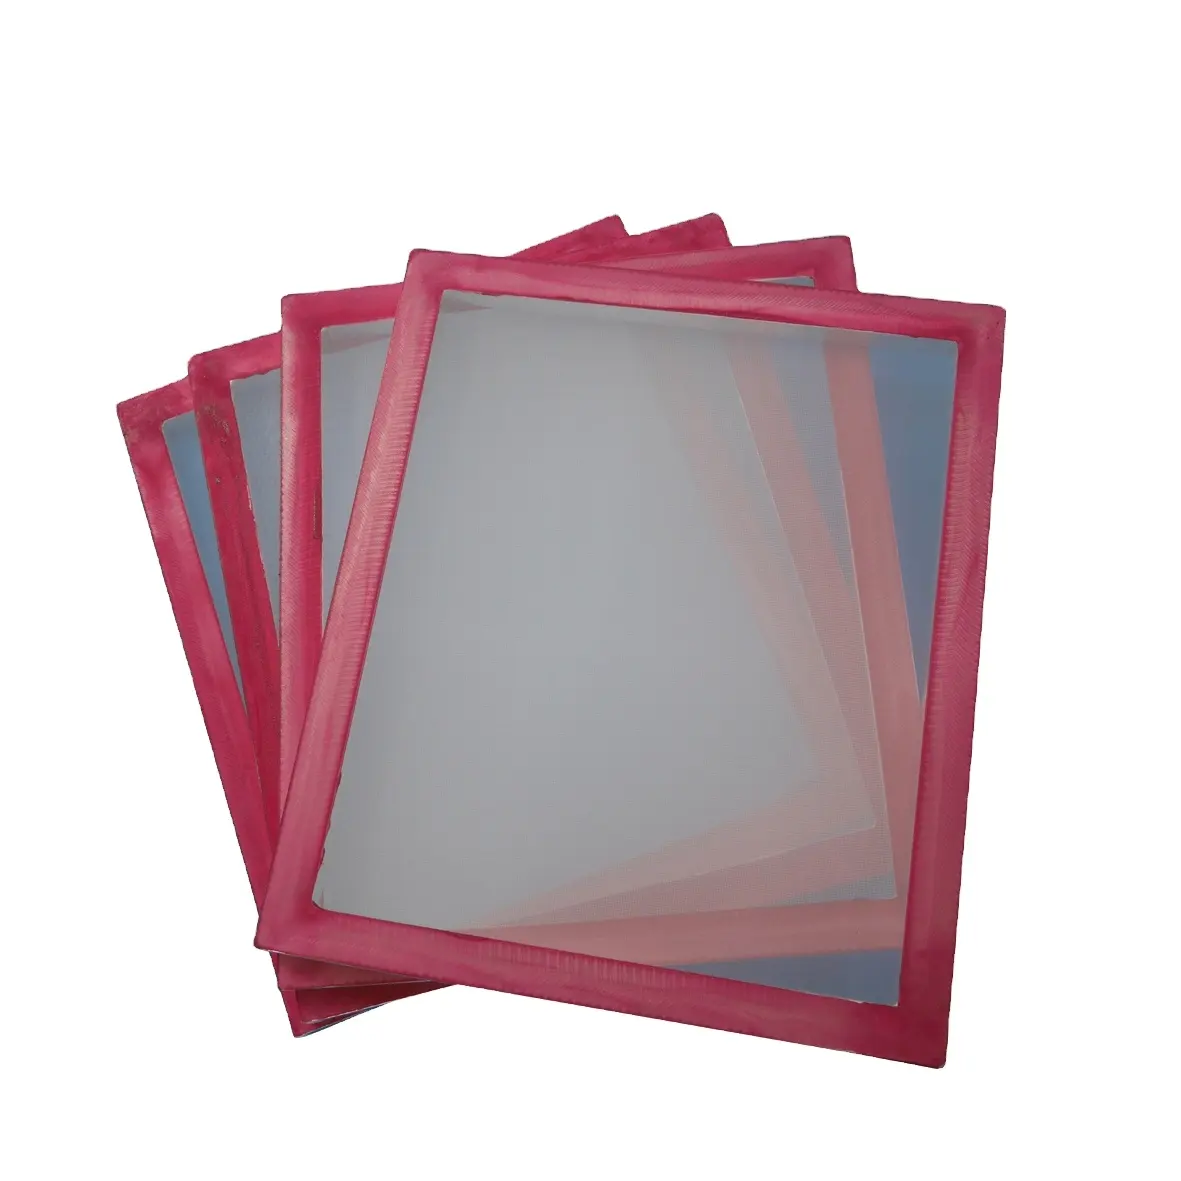 aluminium silk screen printing silkscreen stencil screens mesh frame stretched aluminum screen printing frame with mesh